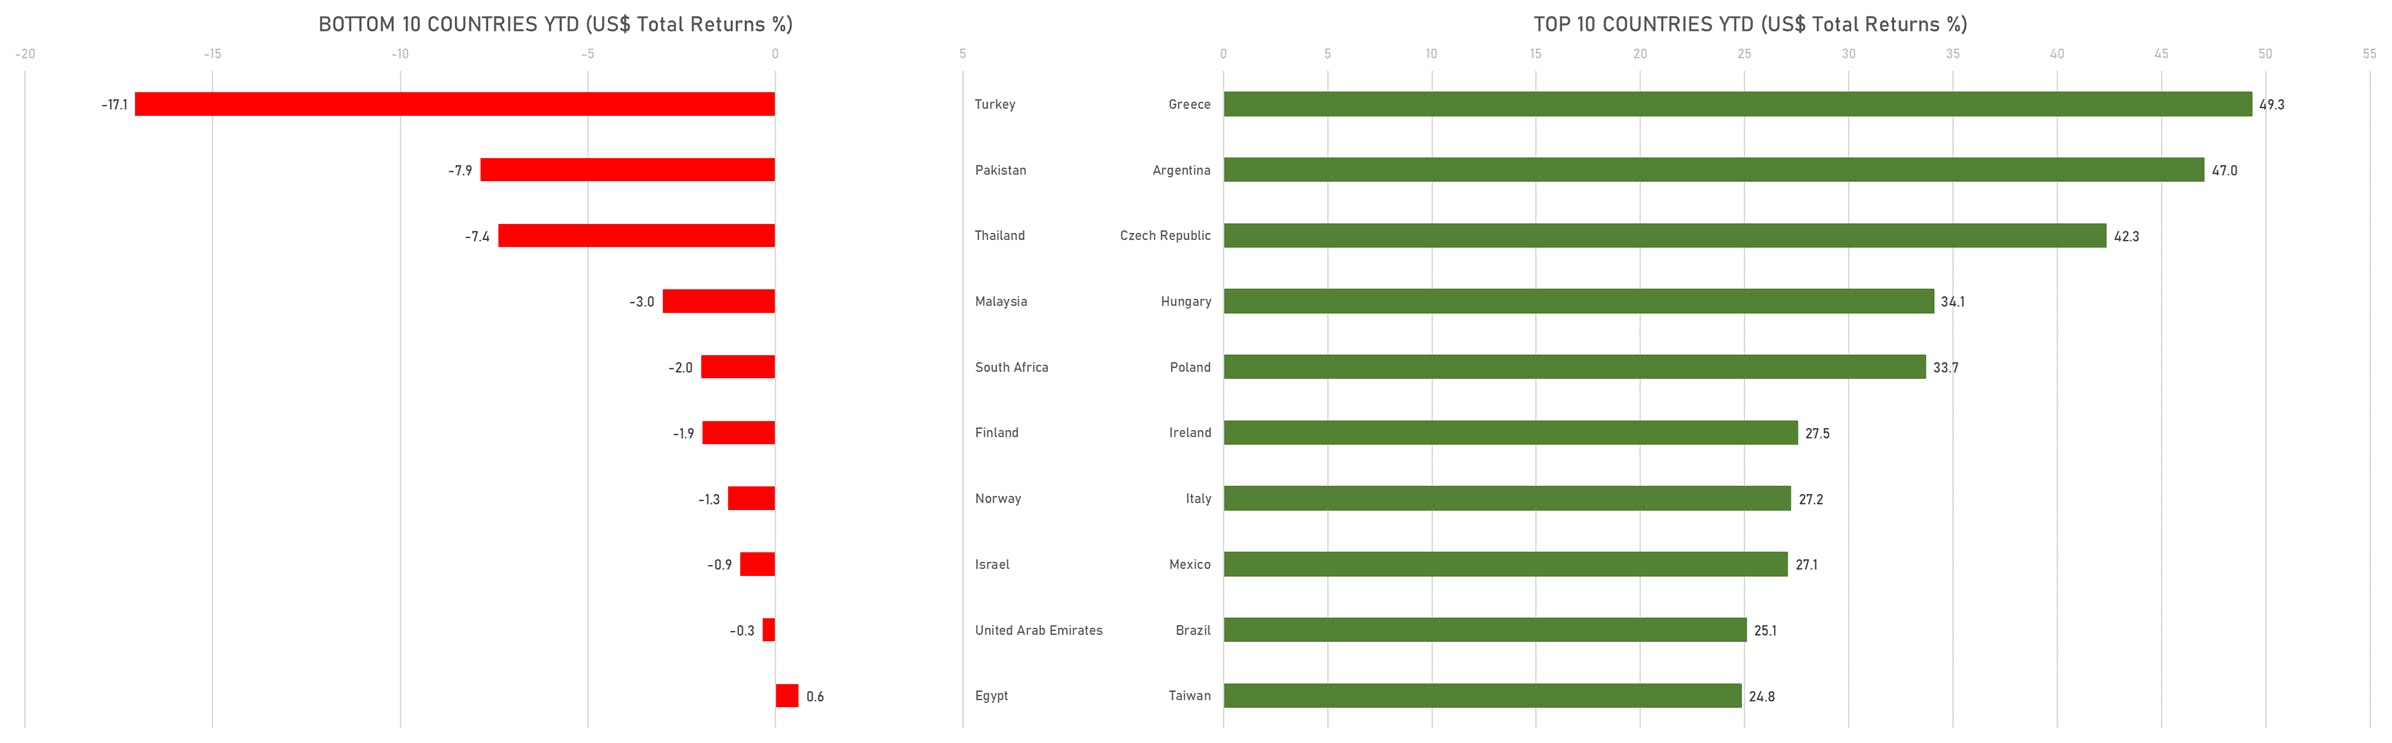 Top & Bottom performing countries YTD USD TR